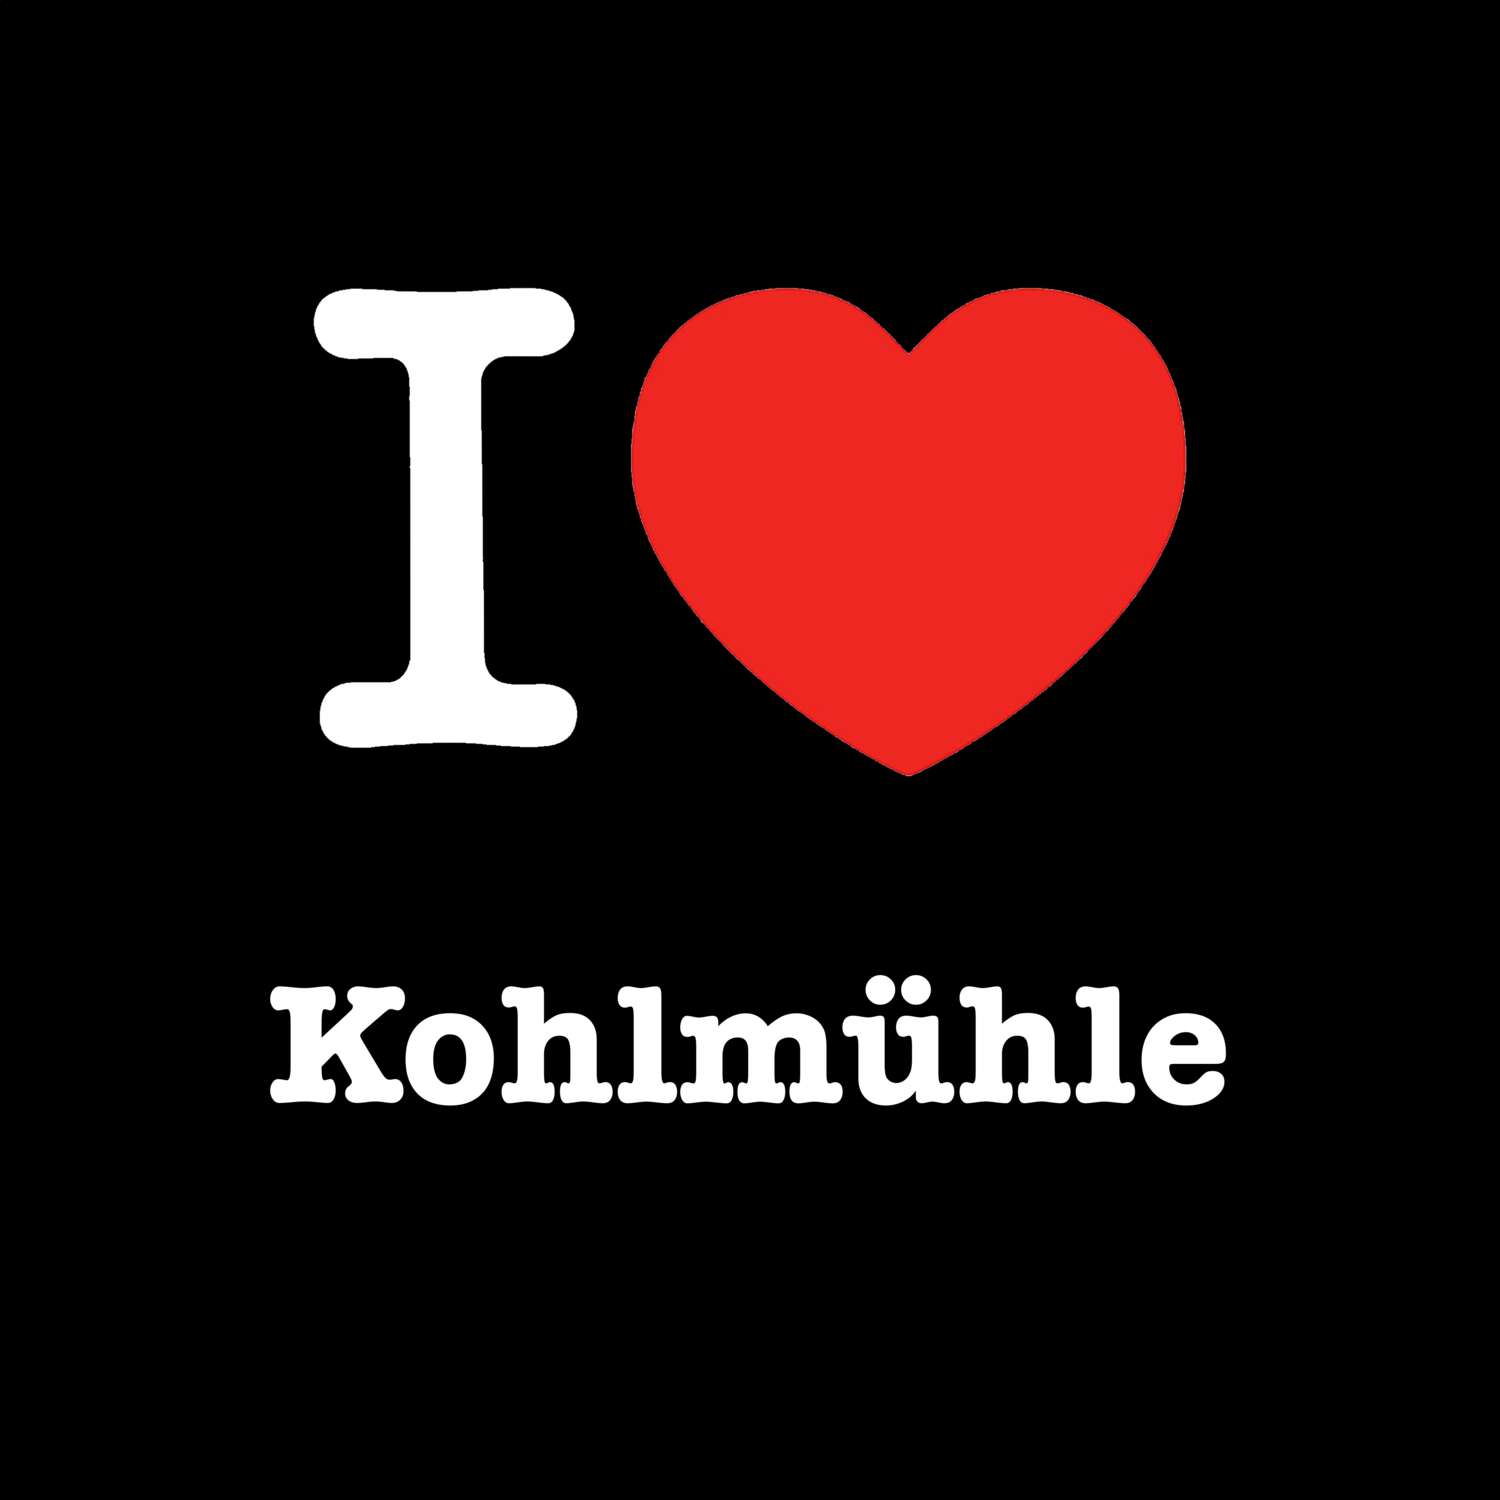 Kohlmühle T-Shirt »I love«